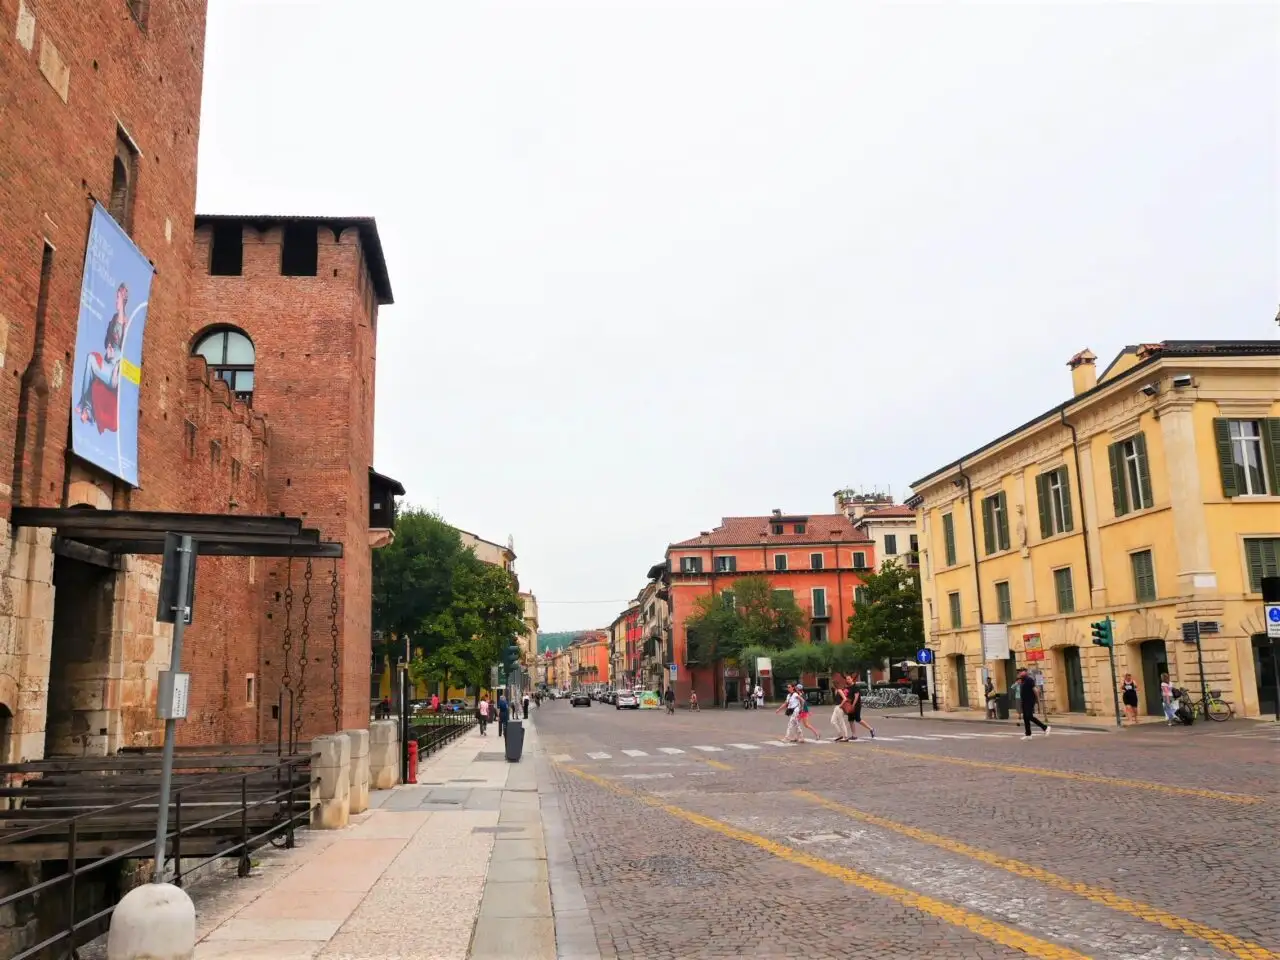 Street in which Castelvecchio in Verona